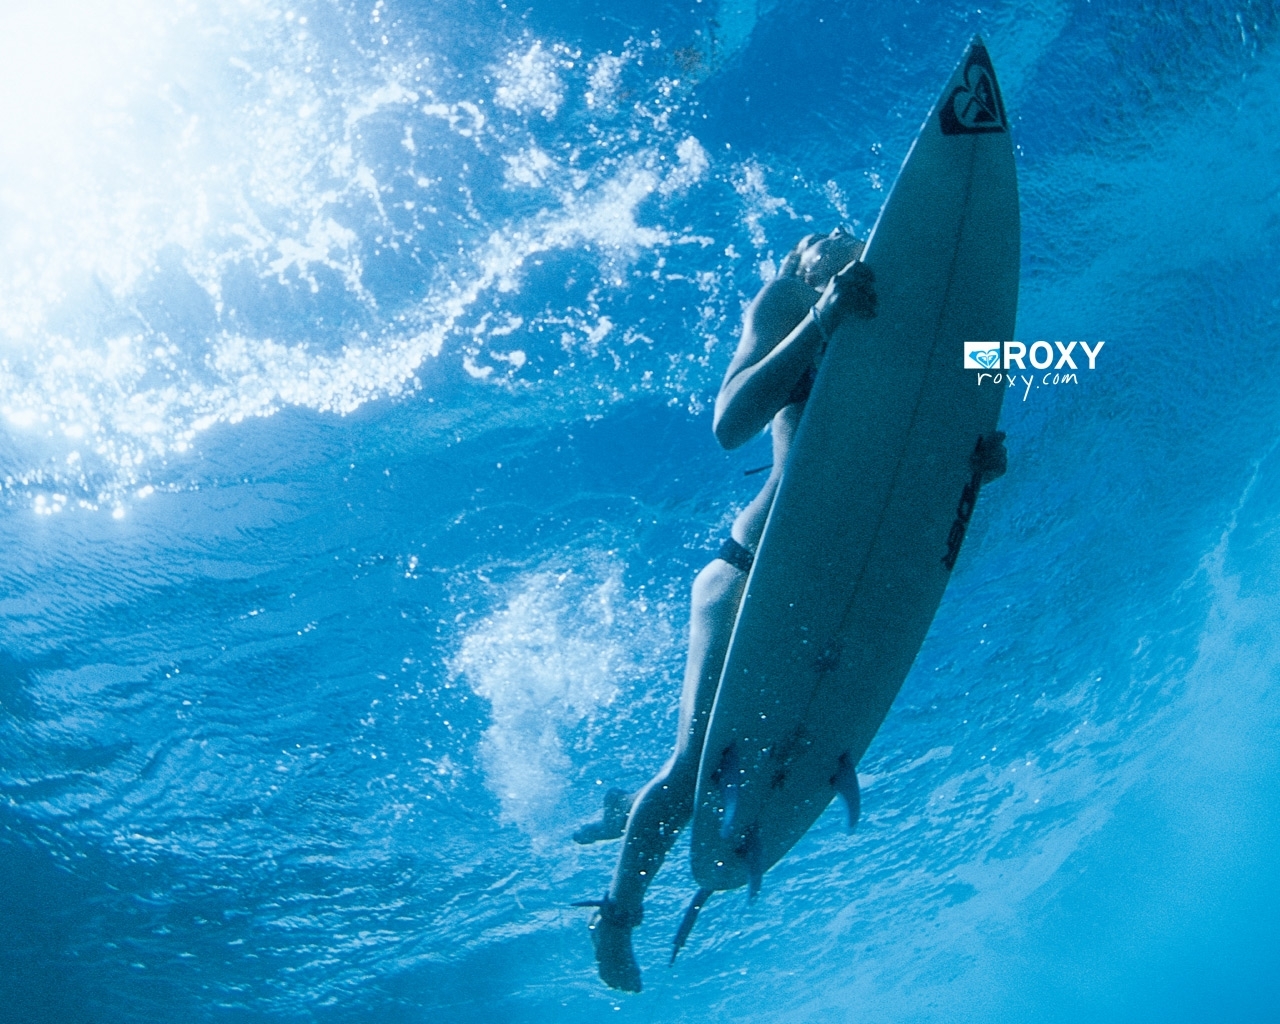 Roxy Surfing Wallpaper